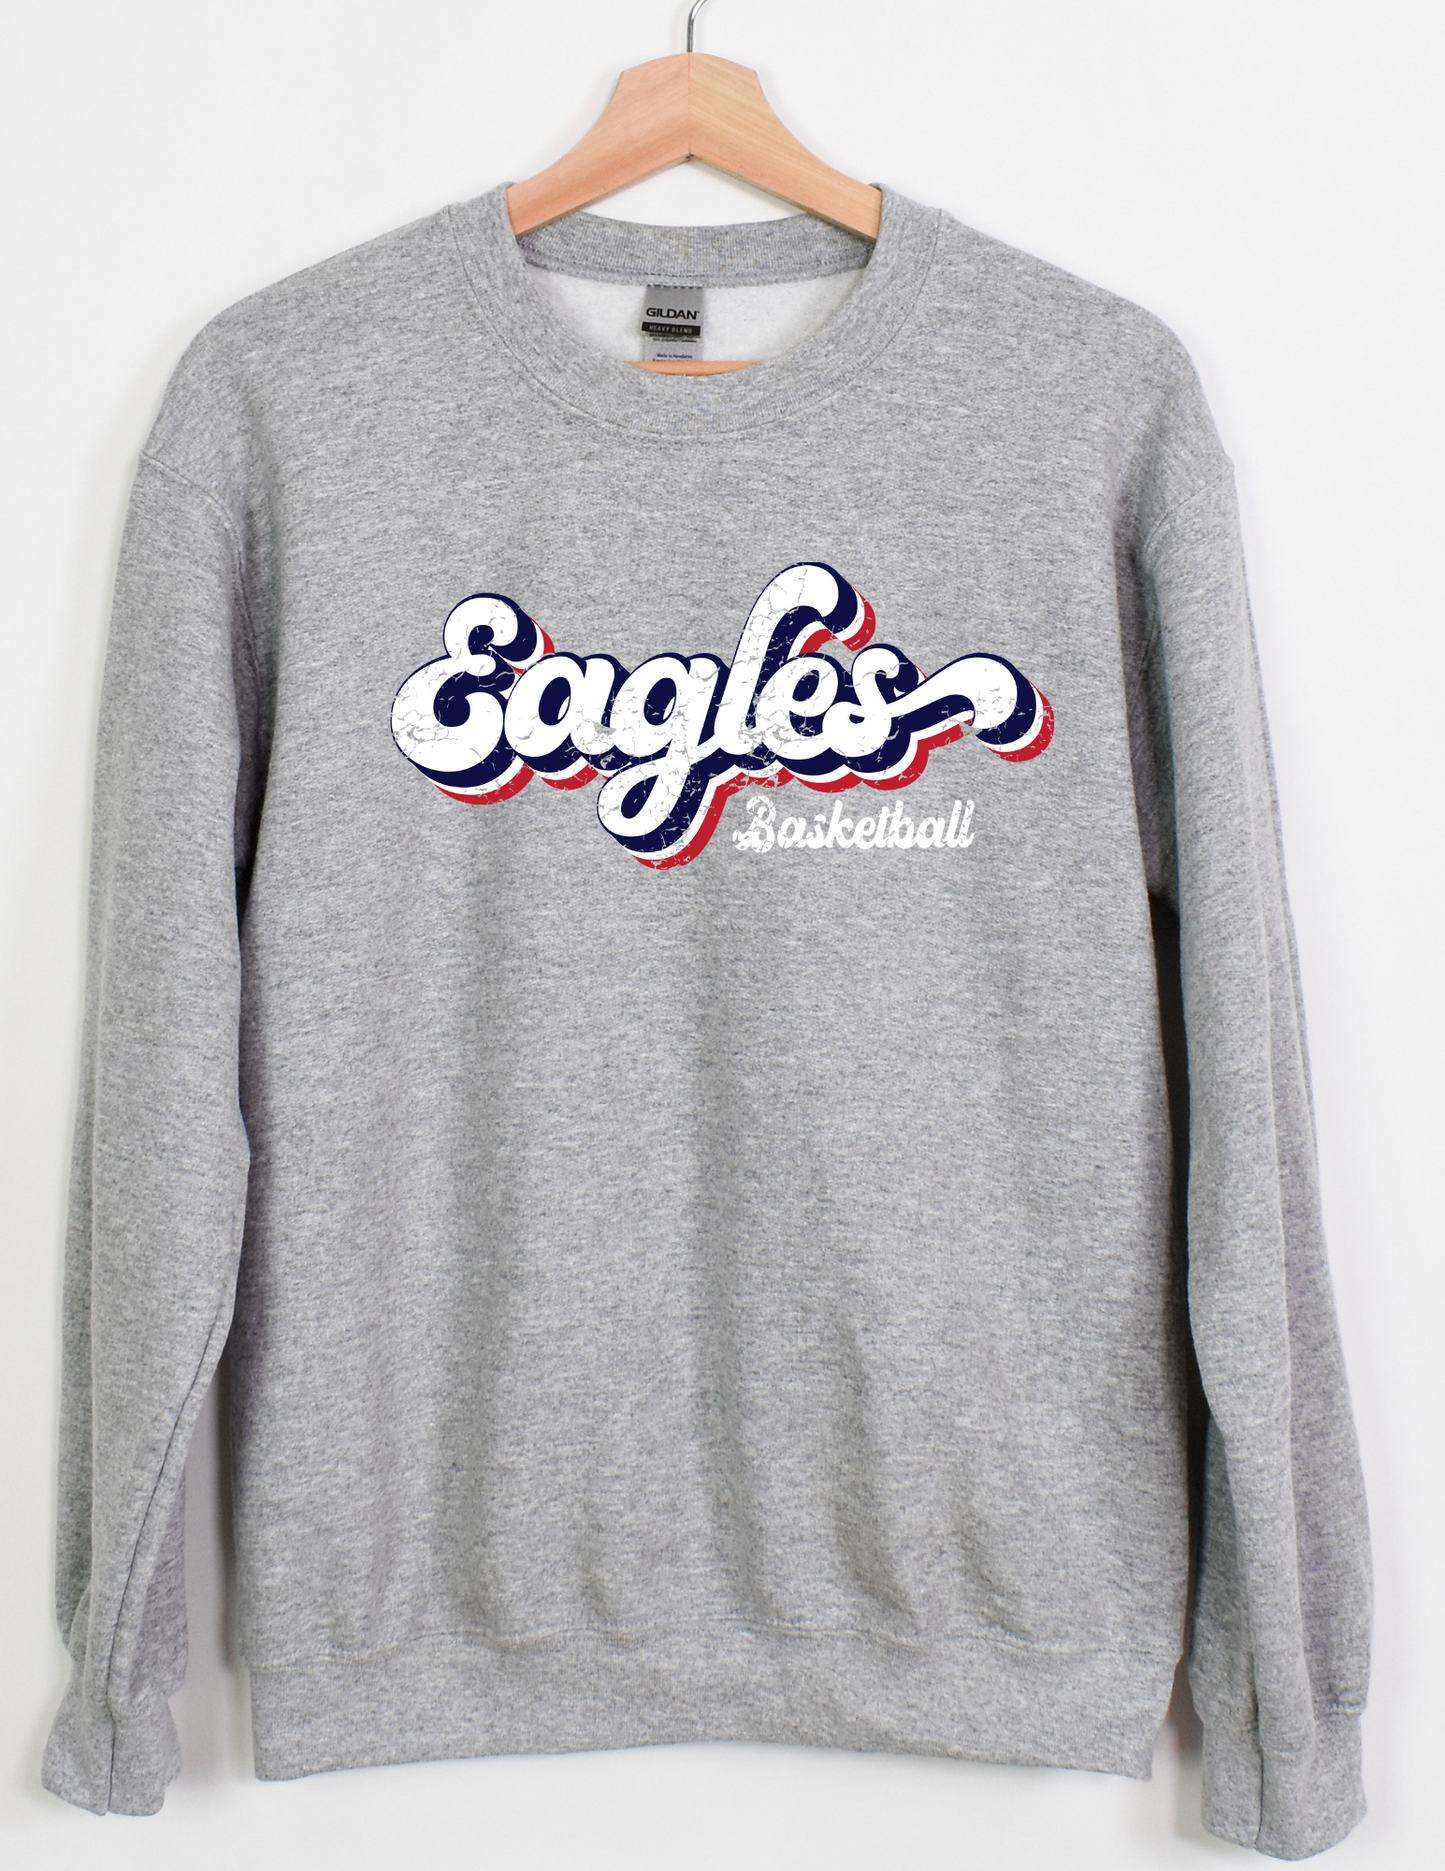 Basketball Eagles hoodie or Crewnecks Sweatshirts